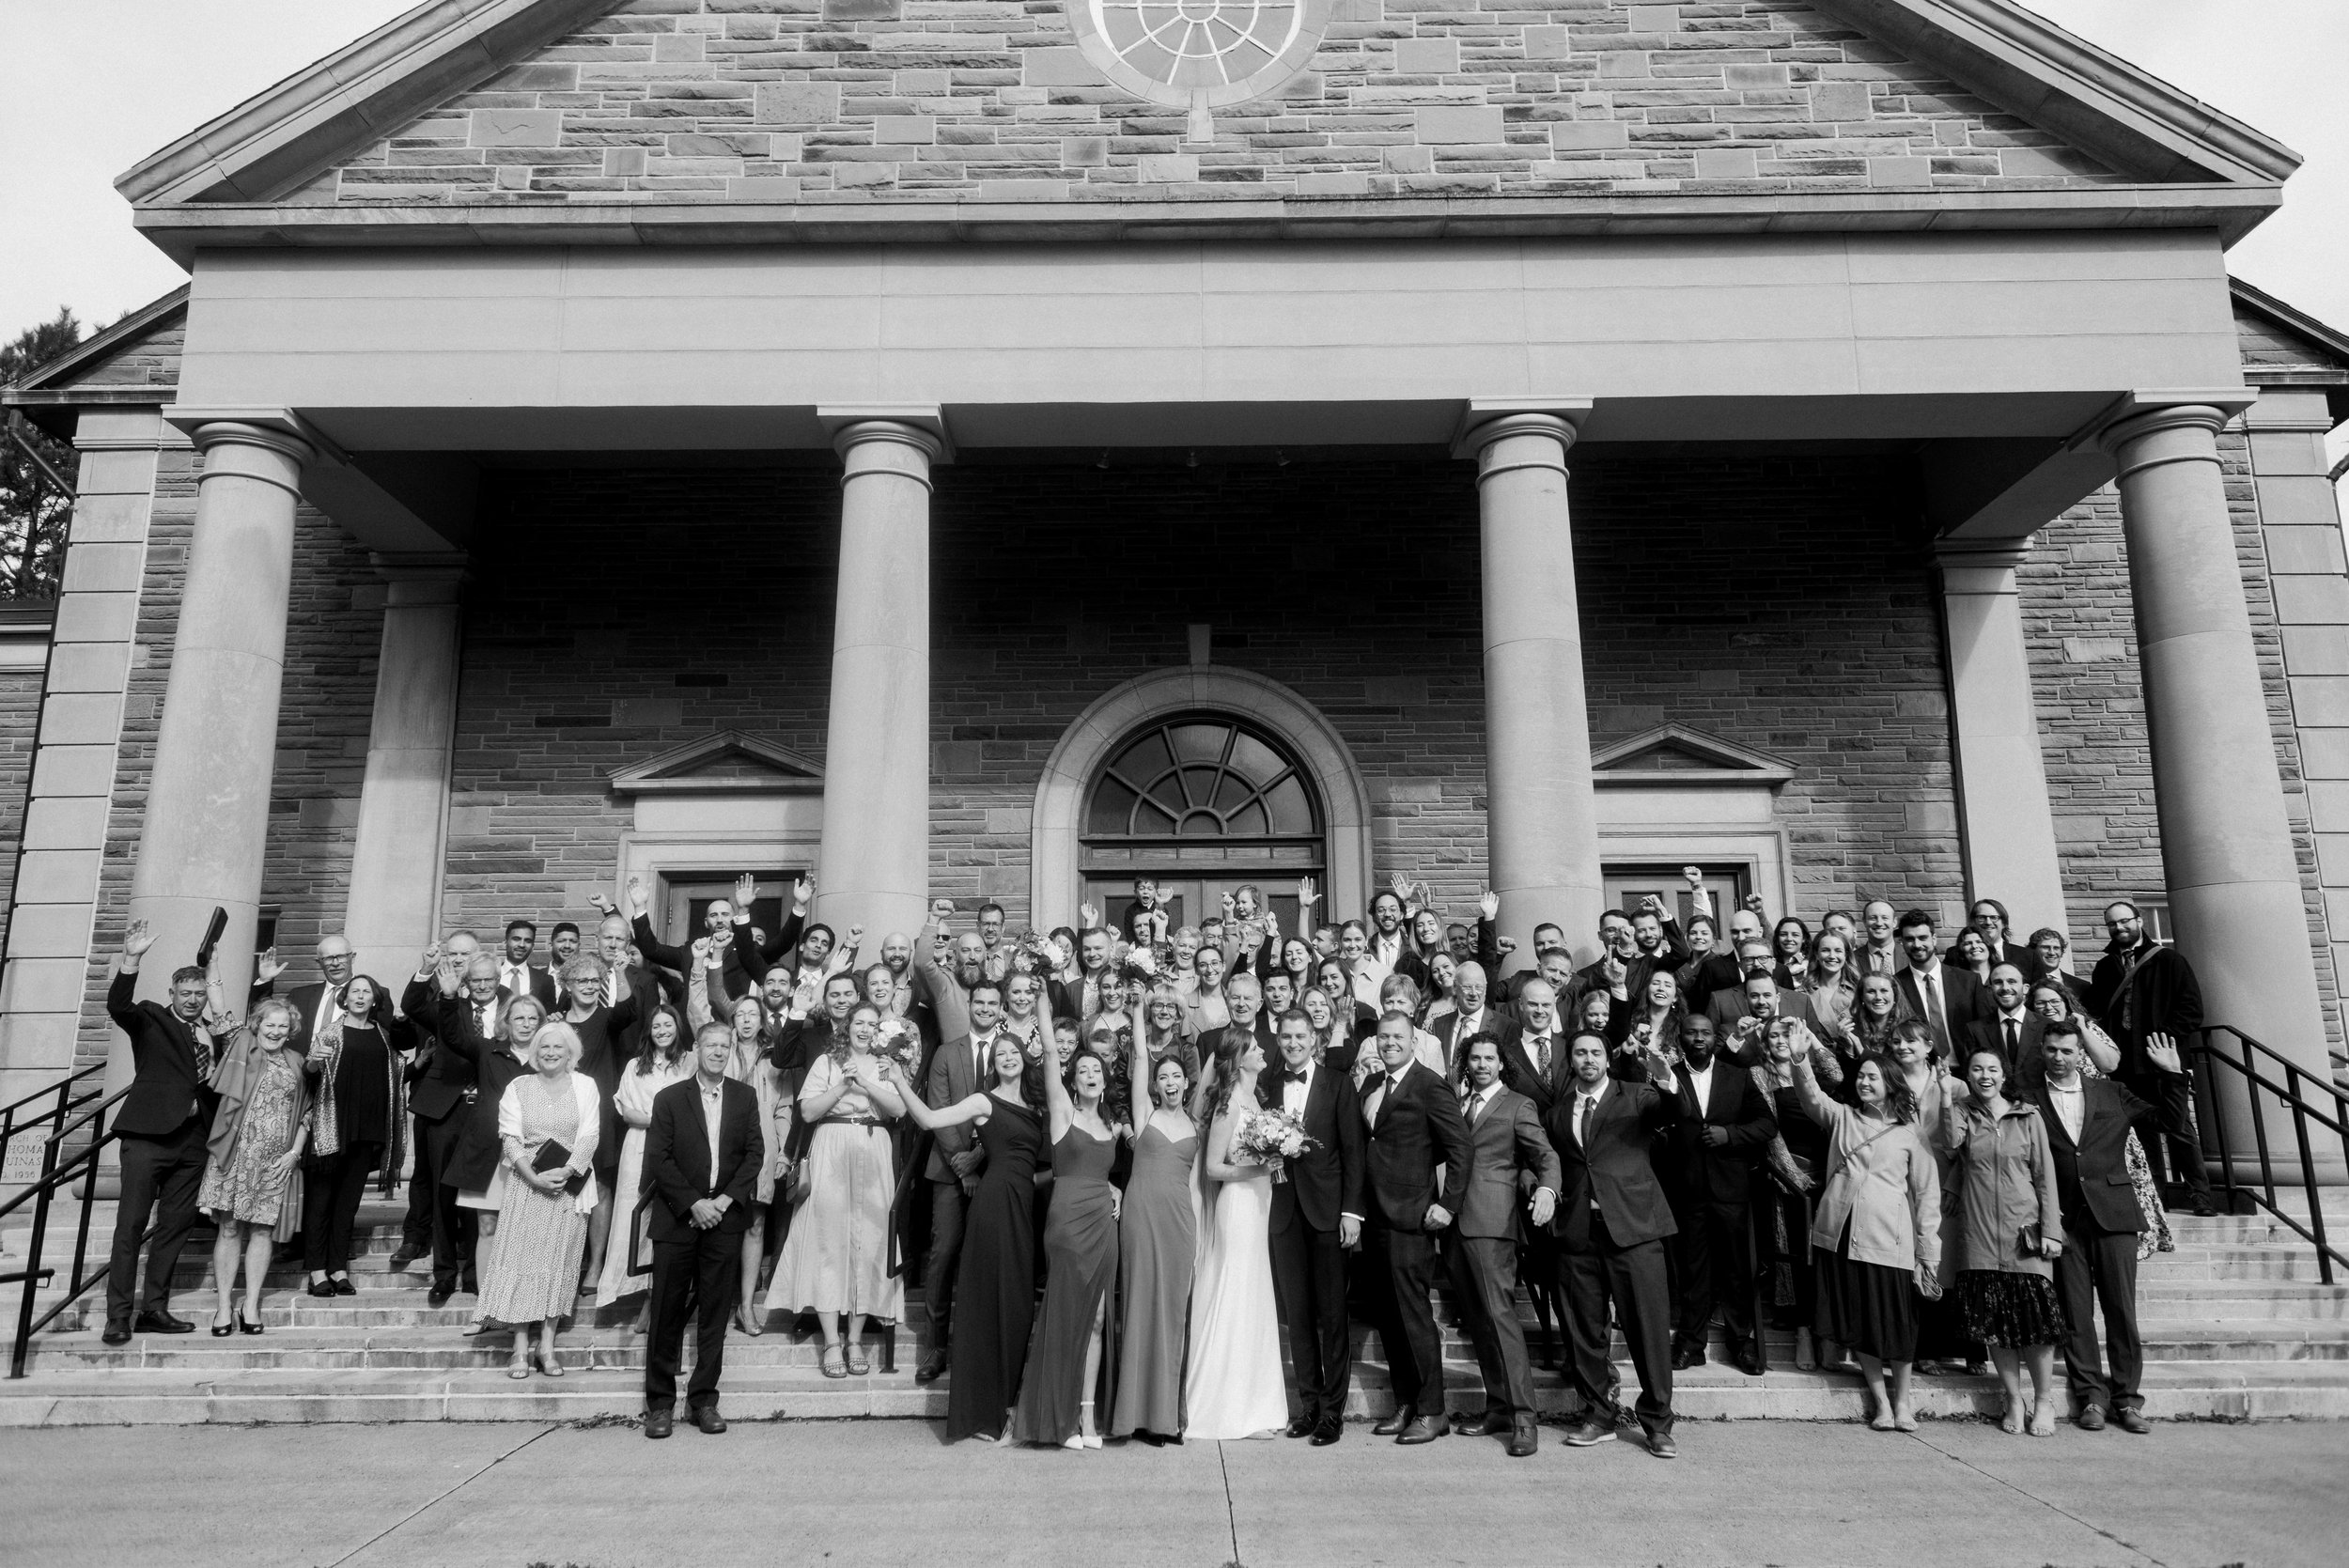 Wedding guests on stairs at Saint Thomas Aquinas Church in Halifax, Nova Scotia